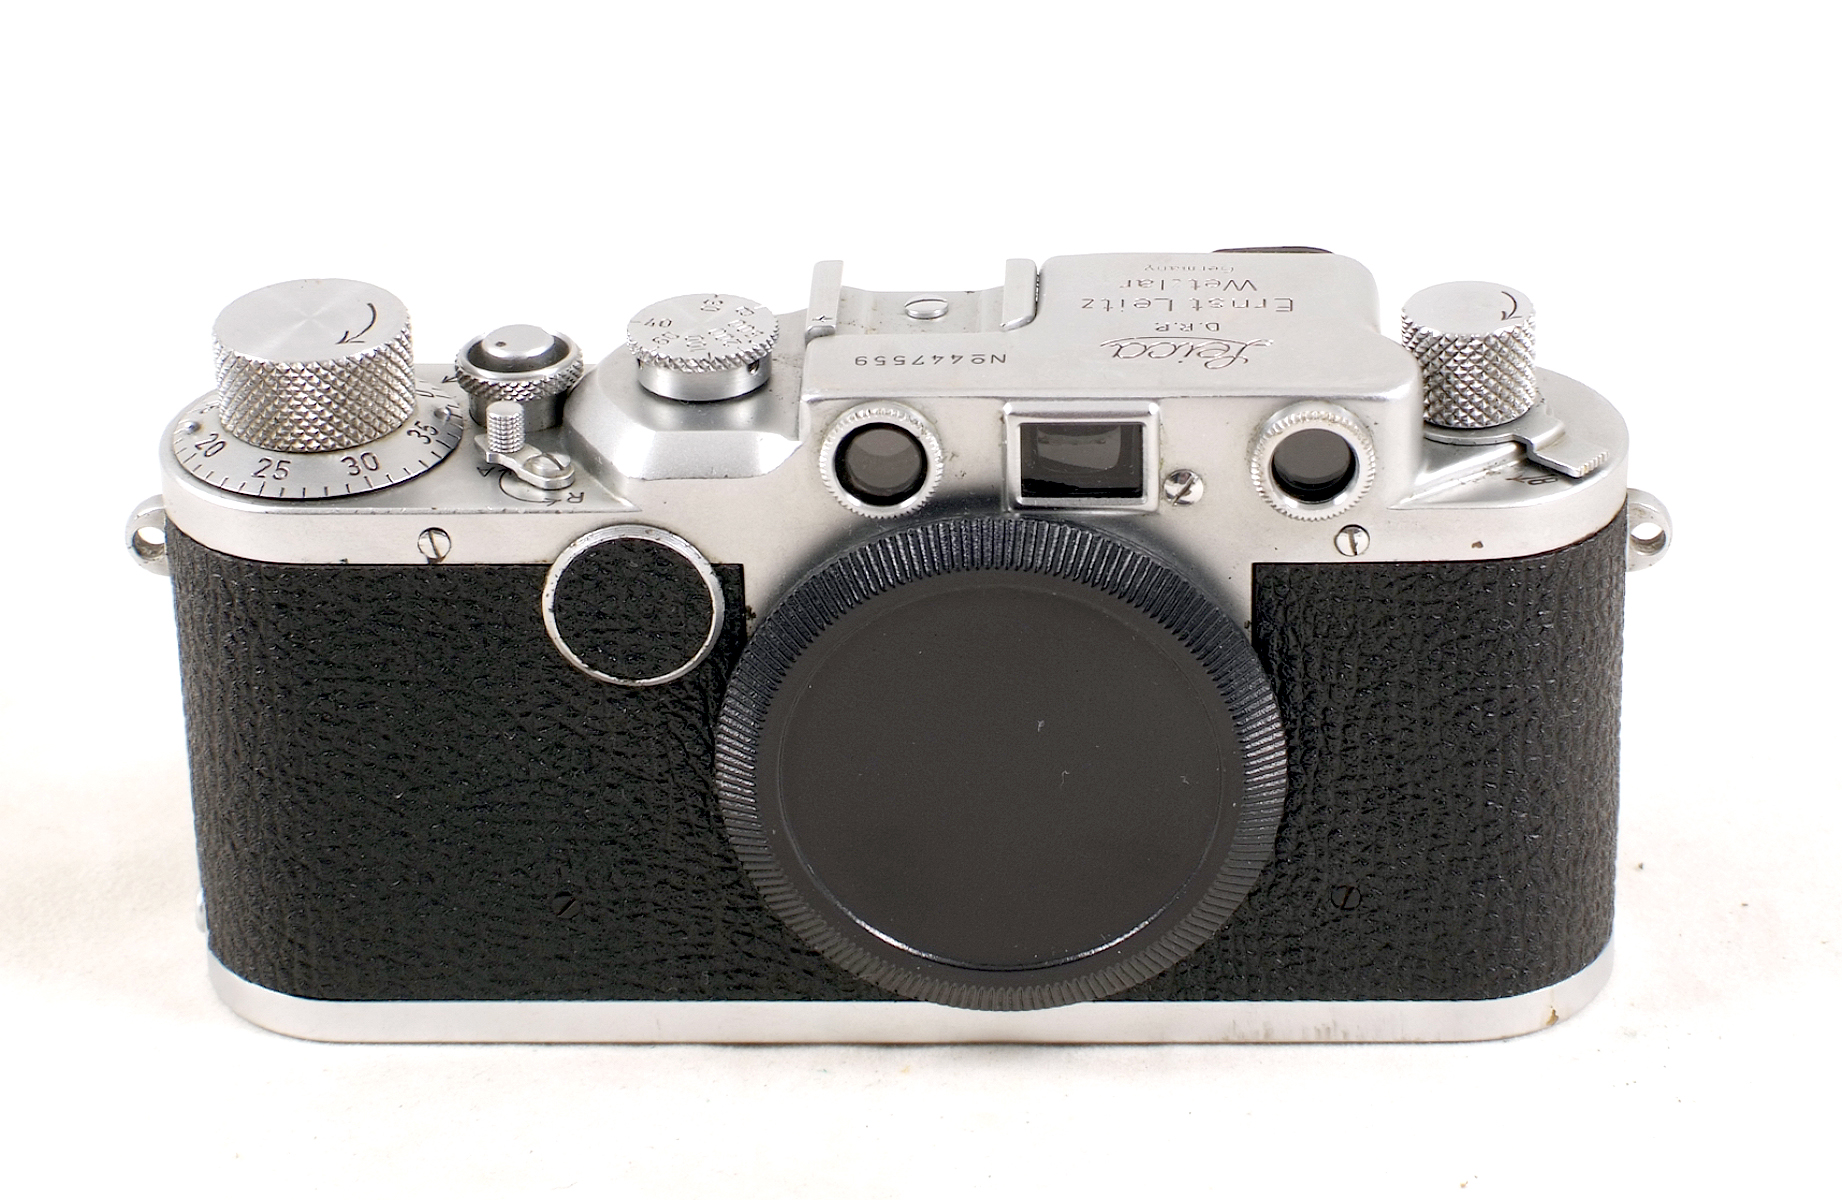 Leica IIc Body #447559 (condition 5F).